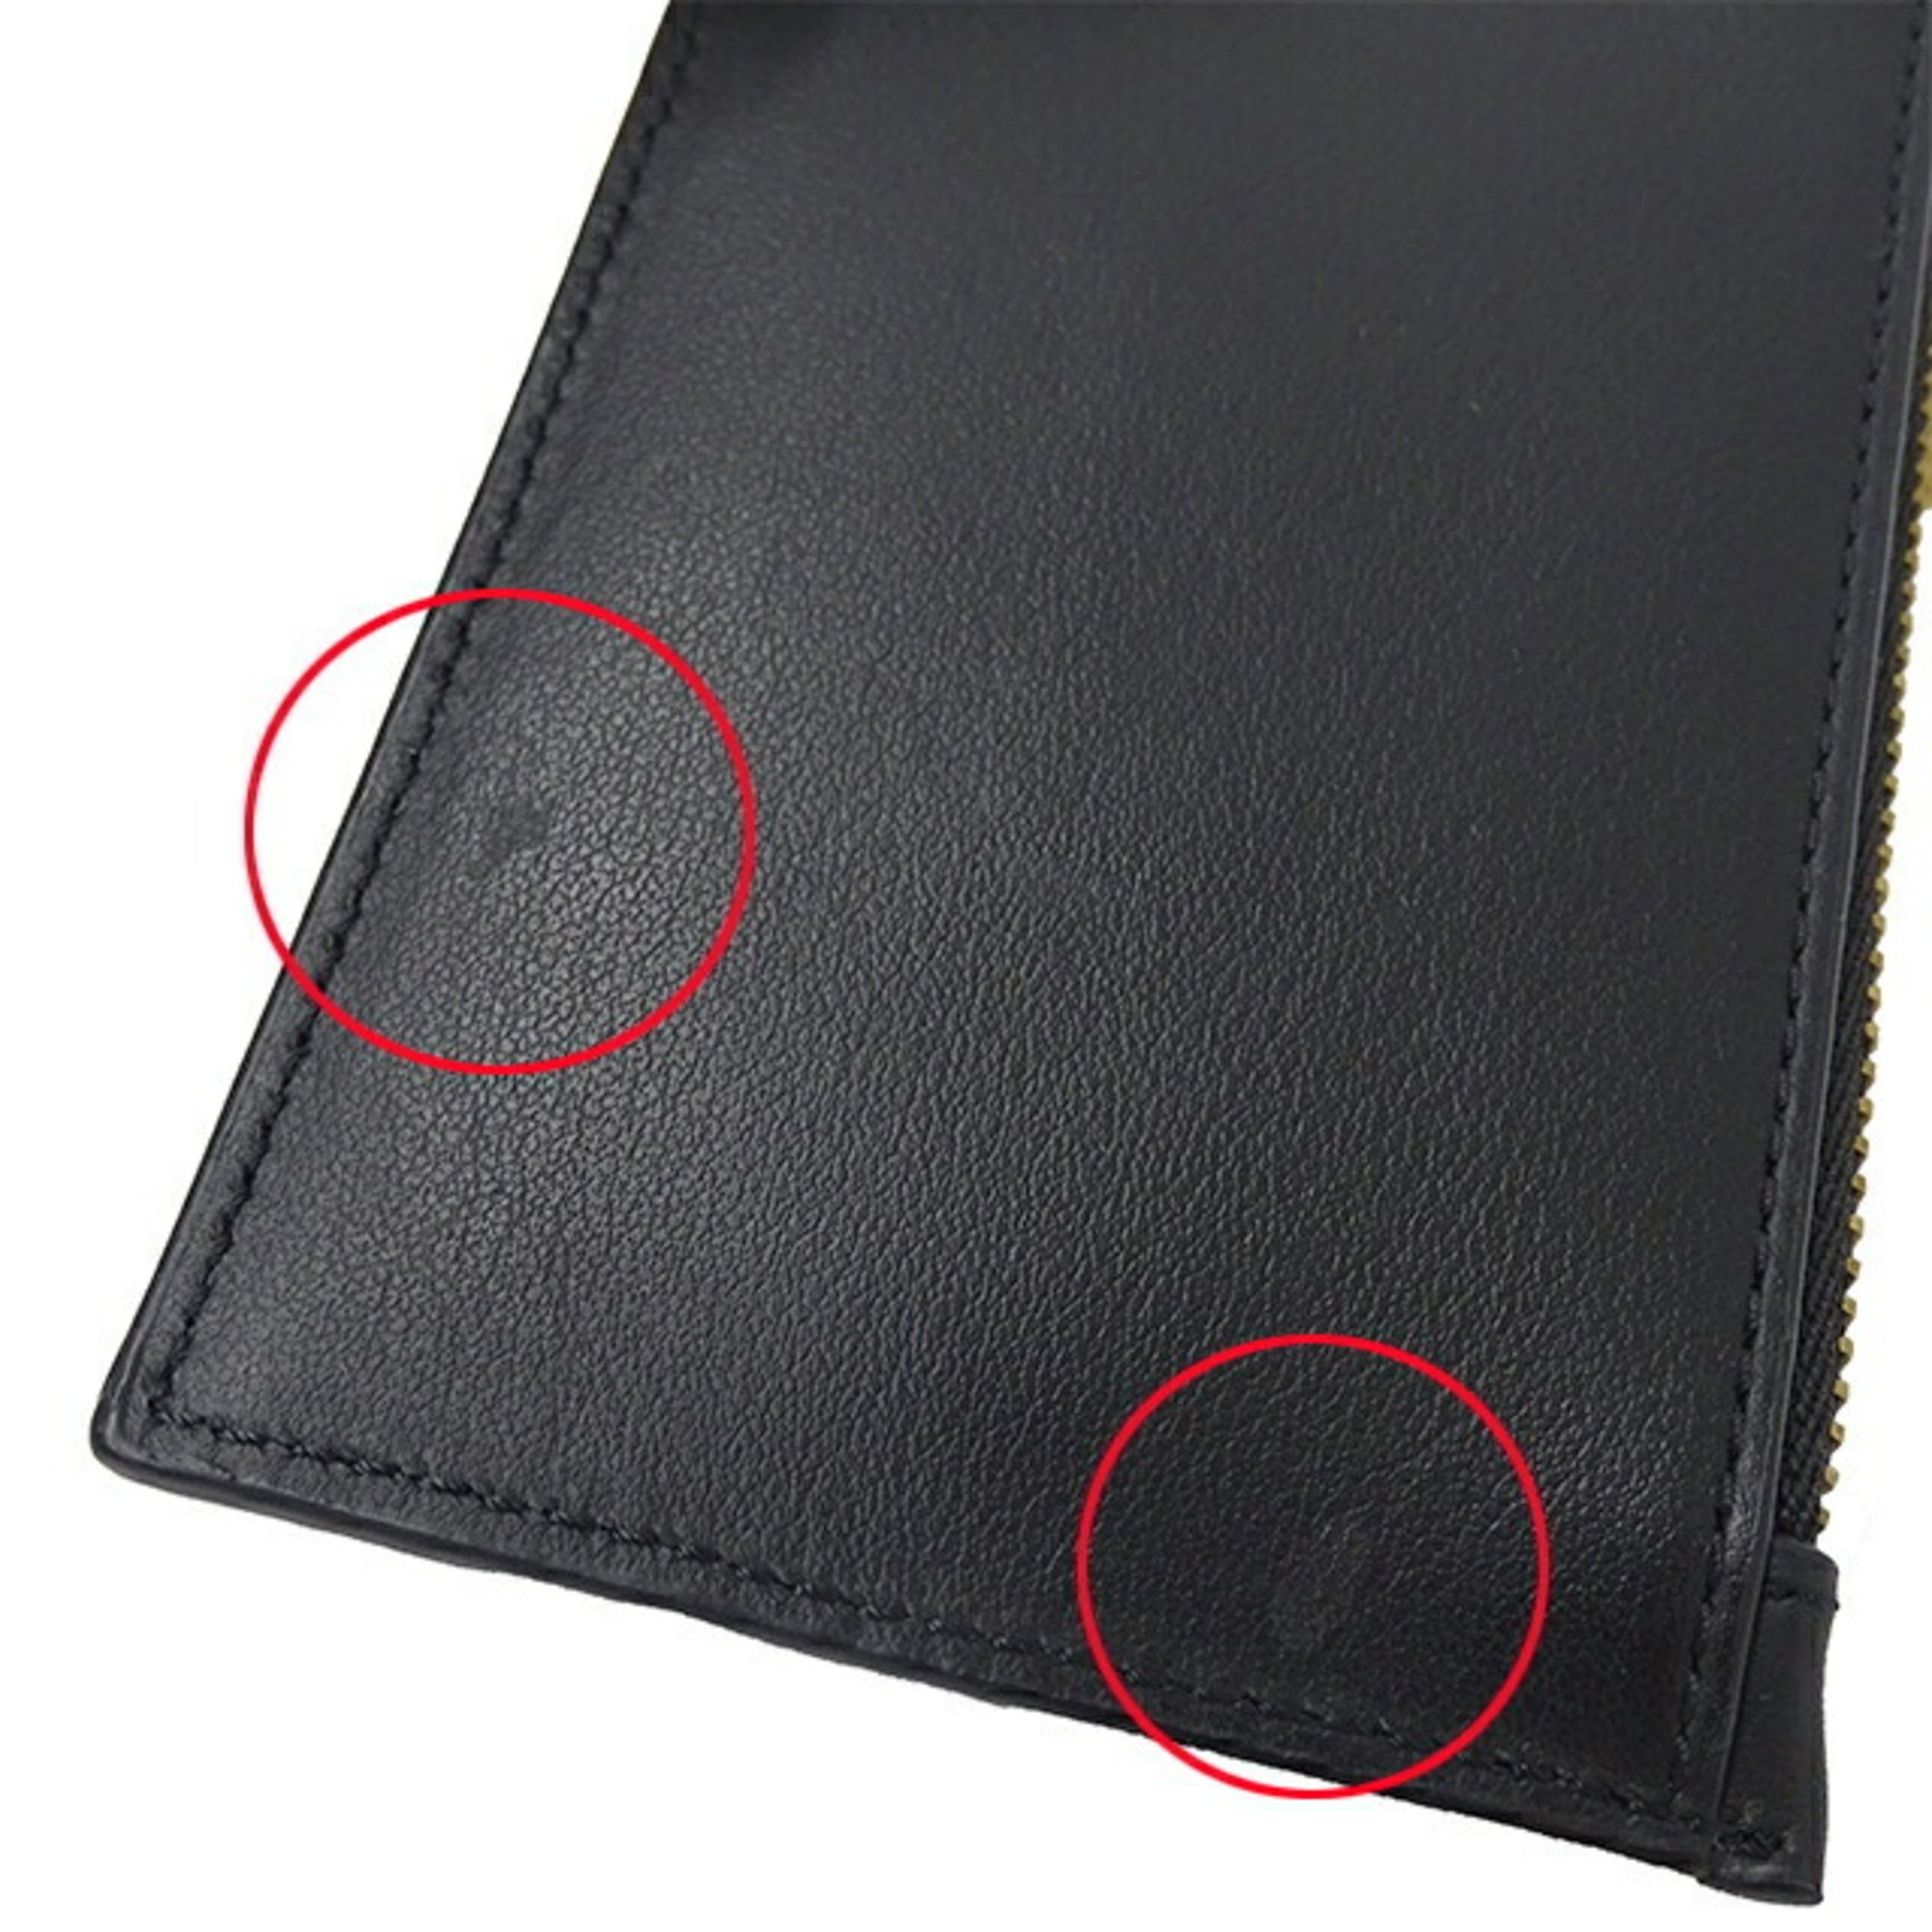 Versace VERSACE Card Case Women's Men's Leather Fragment Black Key Wallet Ring Compact Medusa